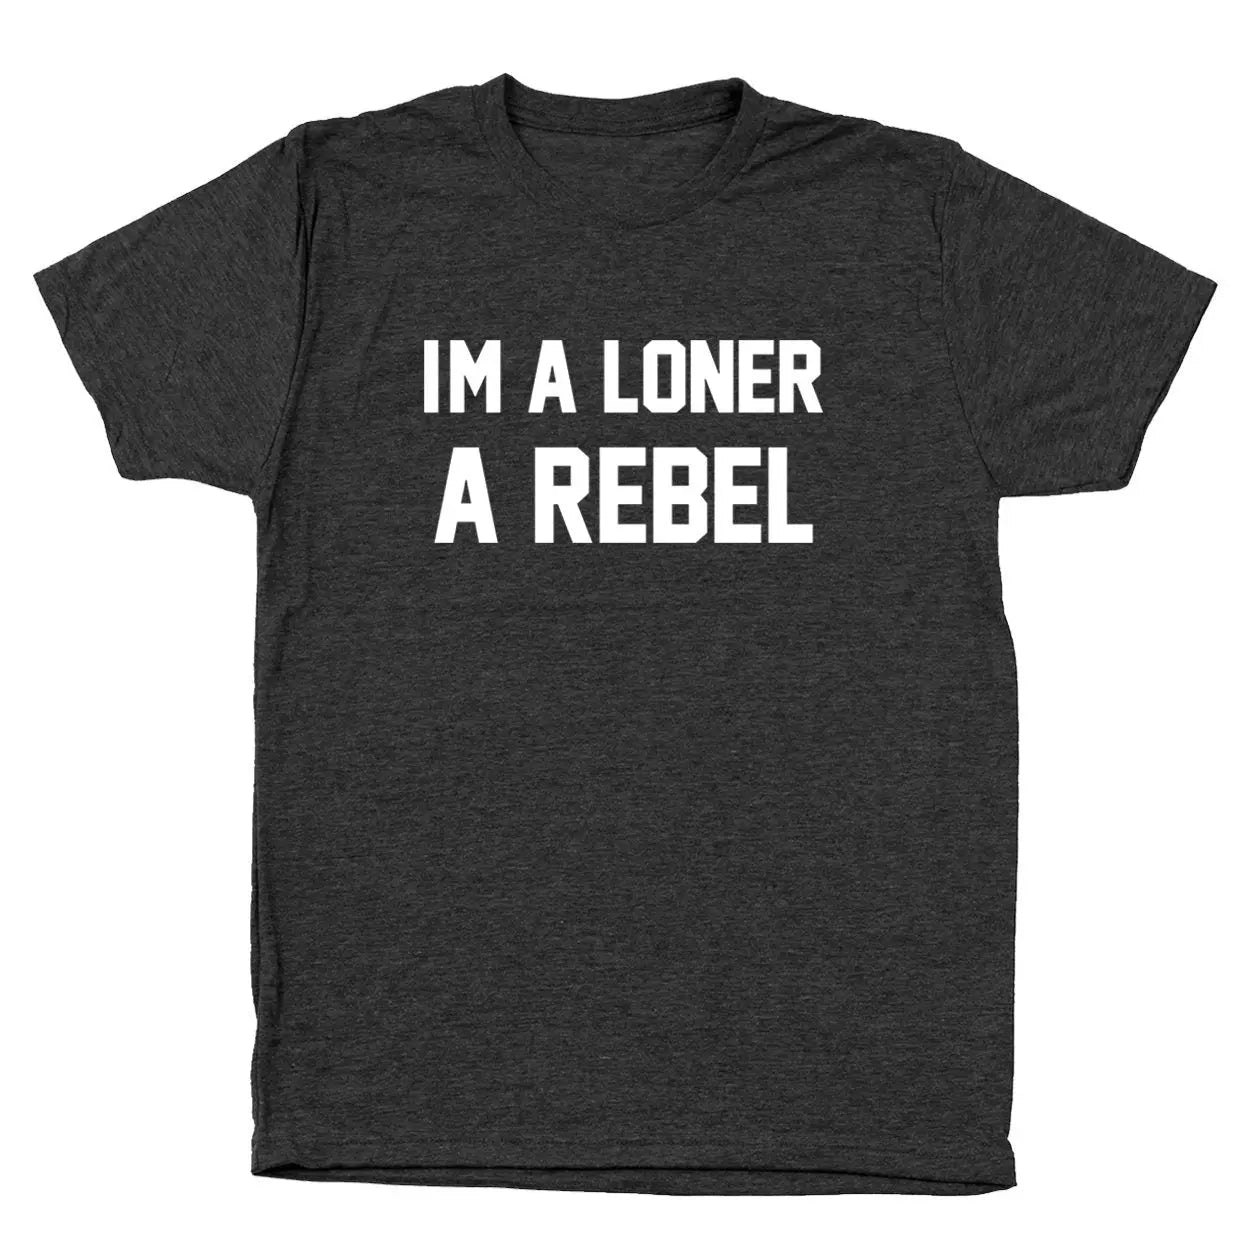 I'm A Loner A Rebel Tshirt - Donkey Tees